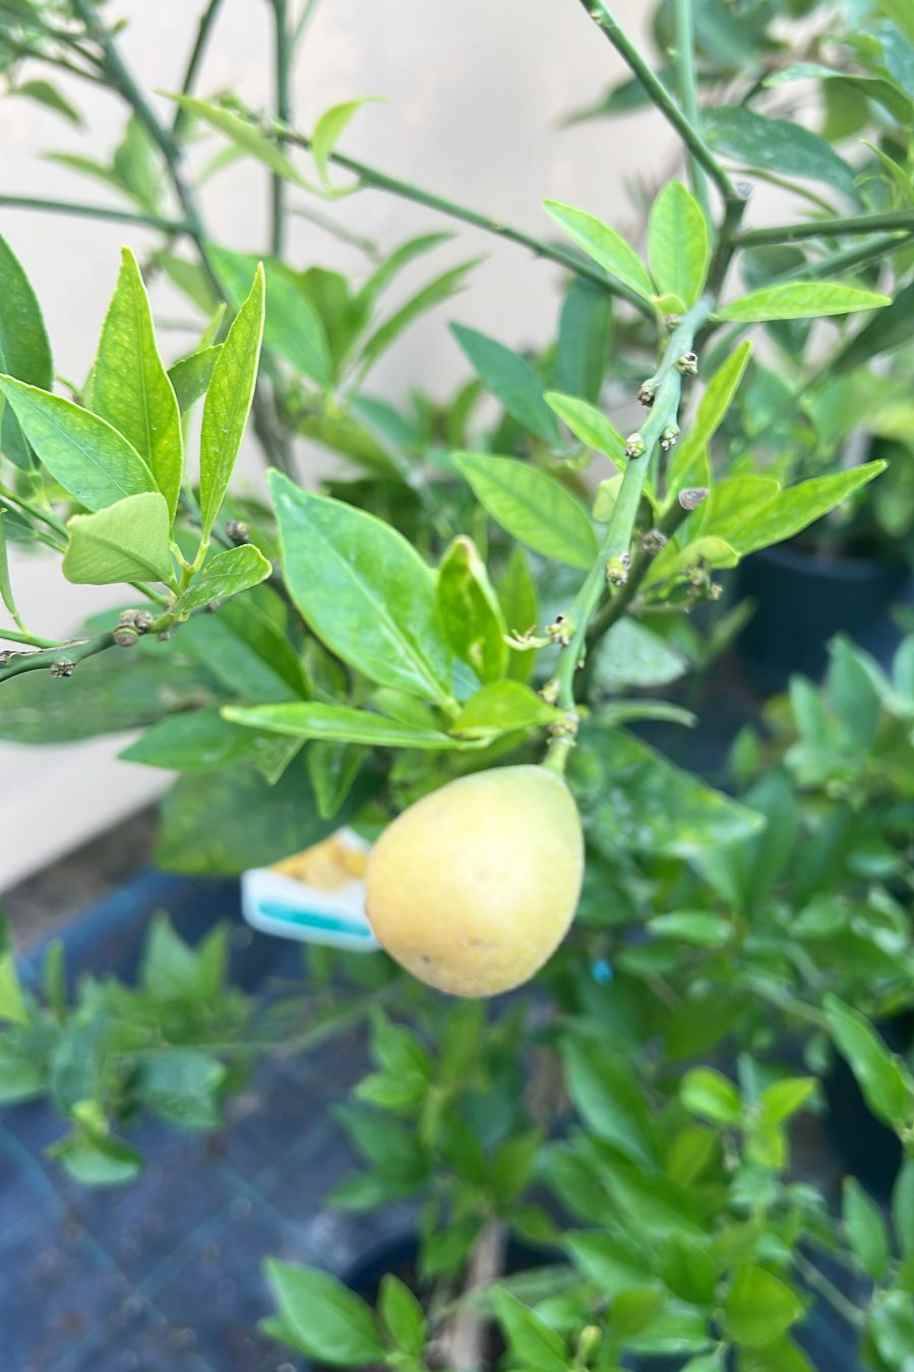 Limequat Citrus Tree